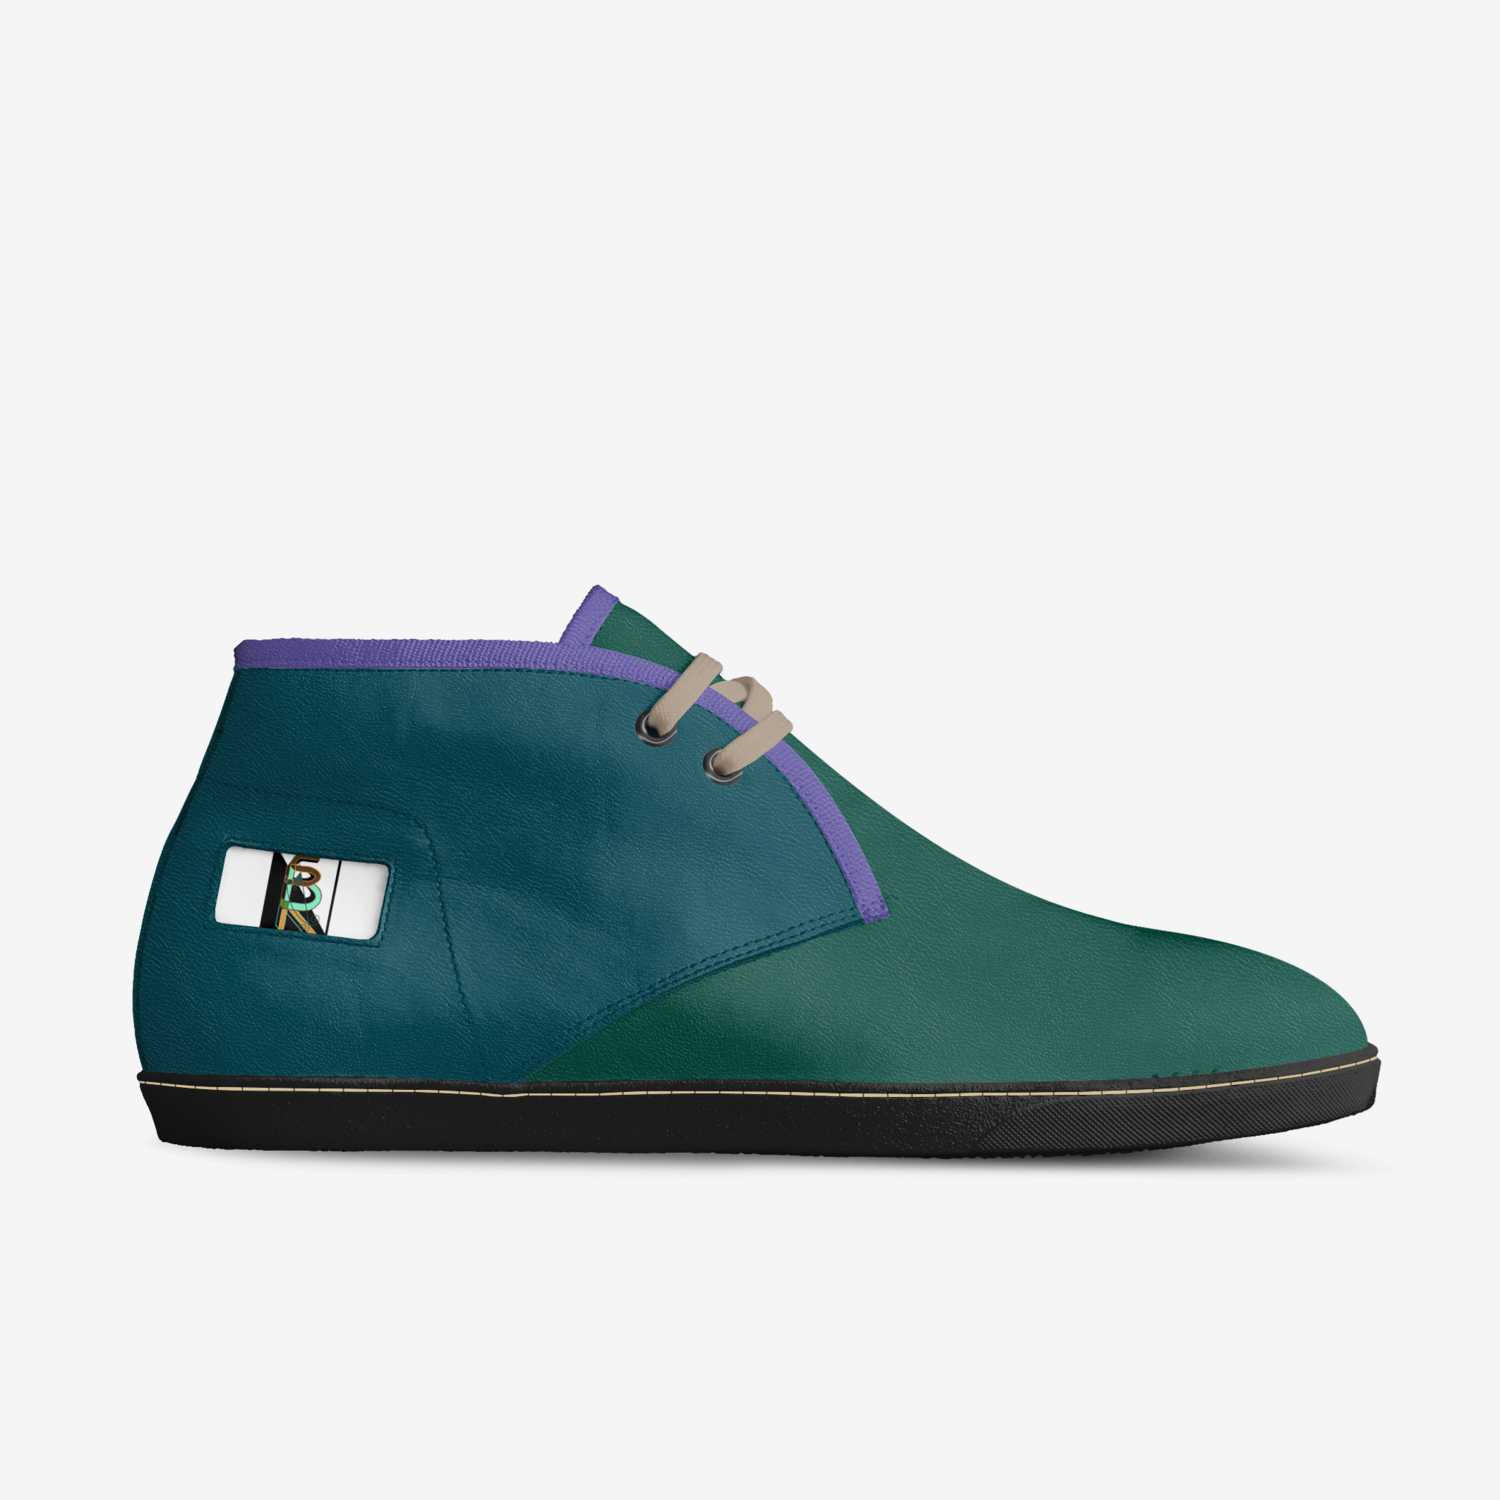 Santa Ba-Row B12 custom made in Italy shoes by Chinara London | Side view